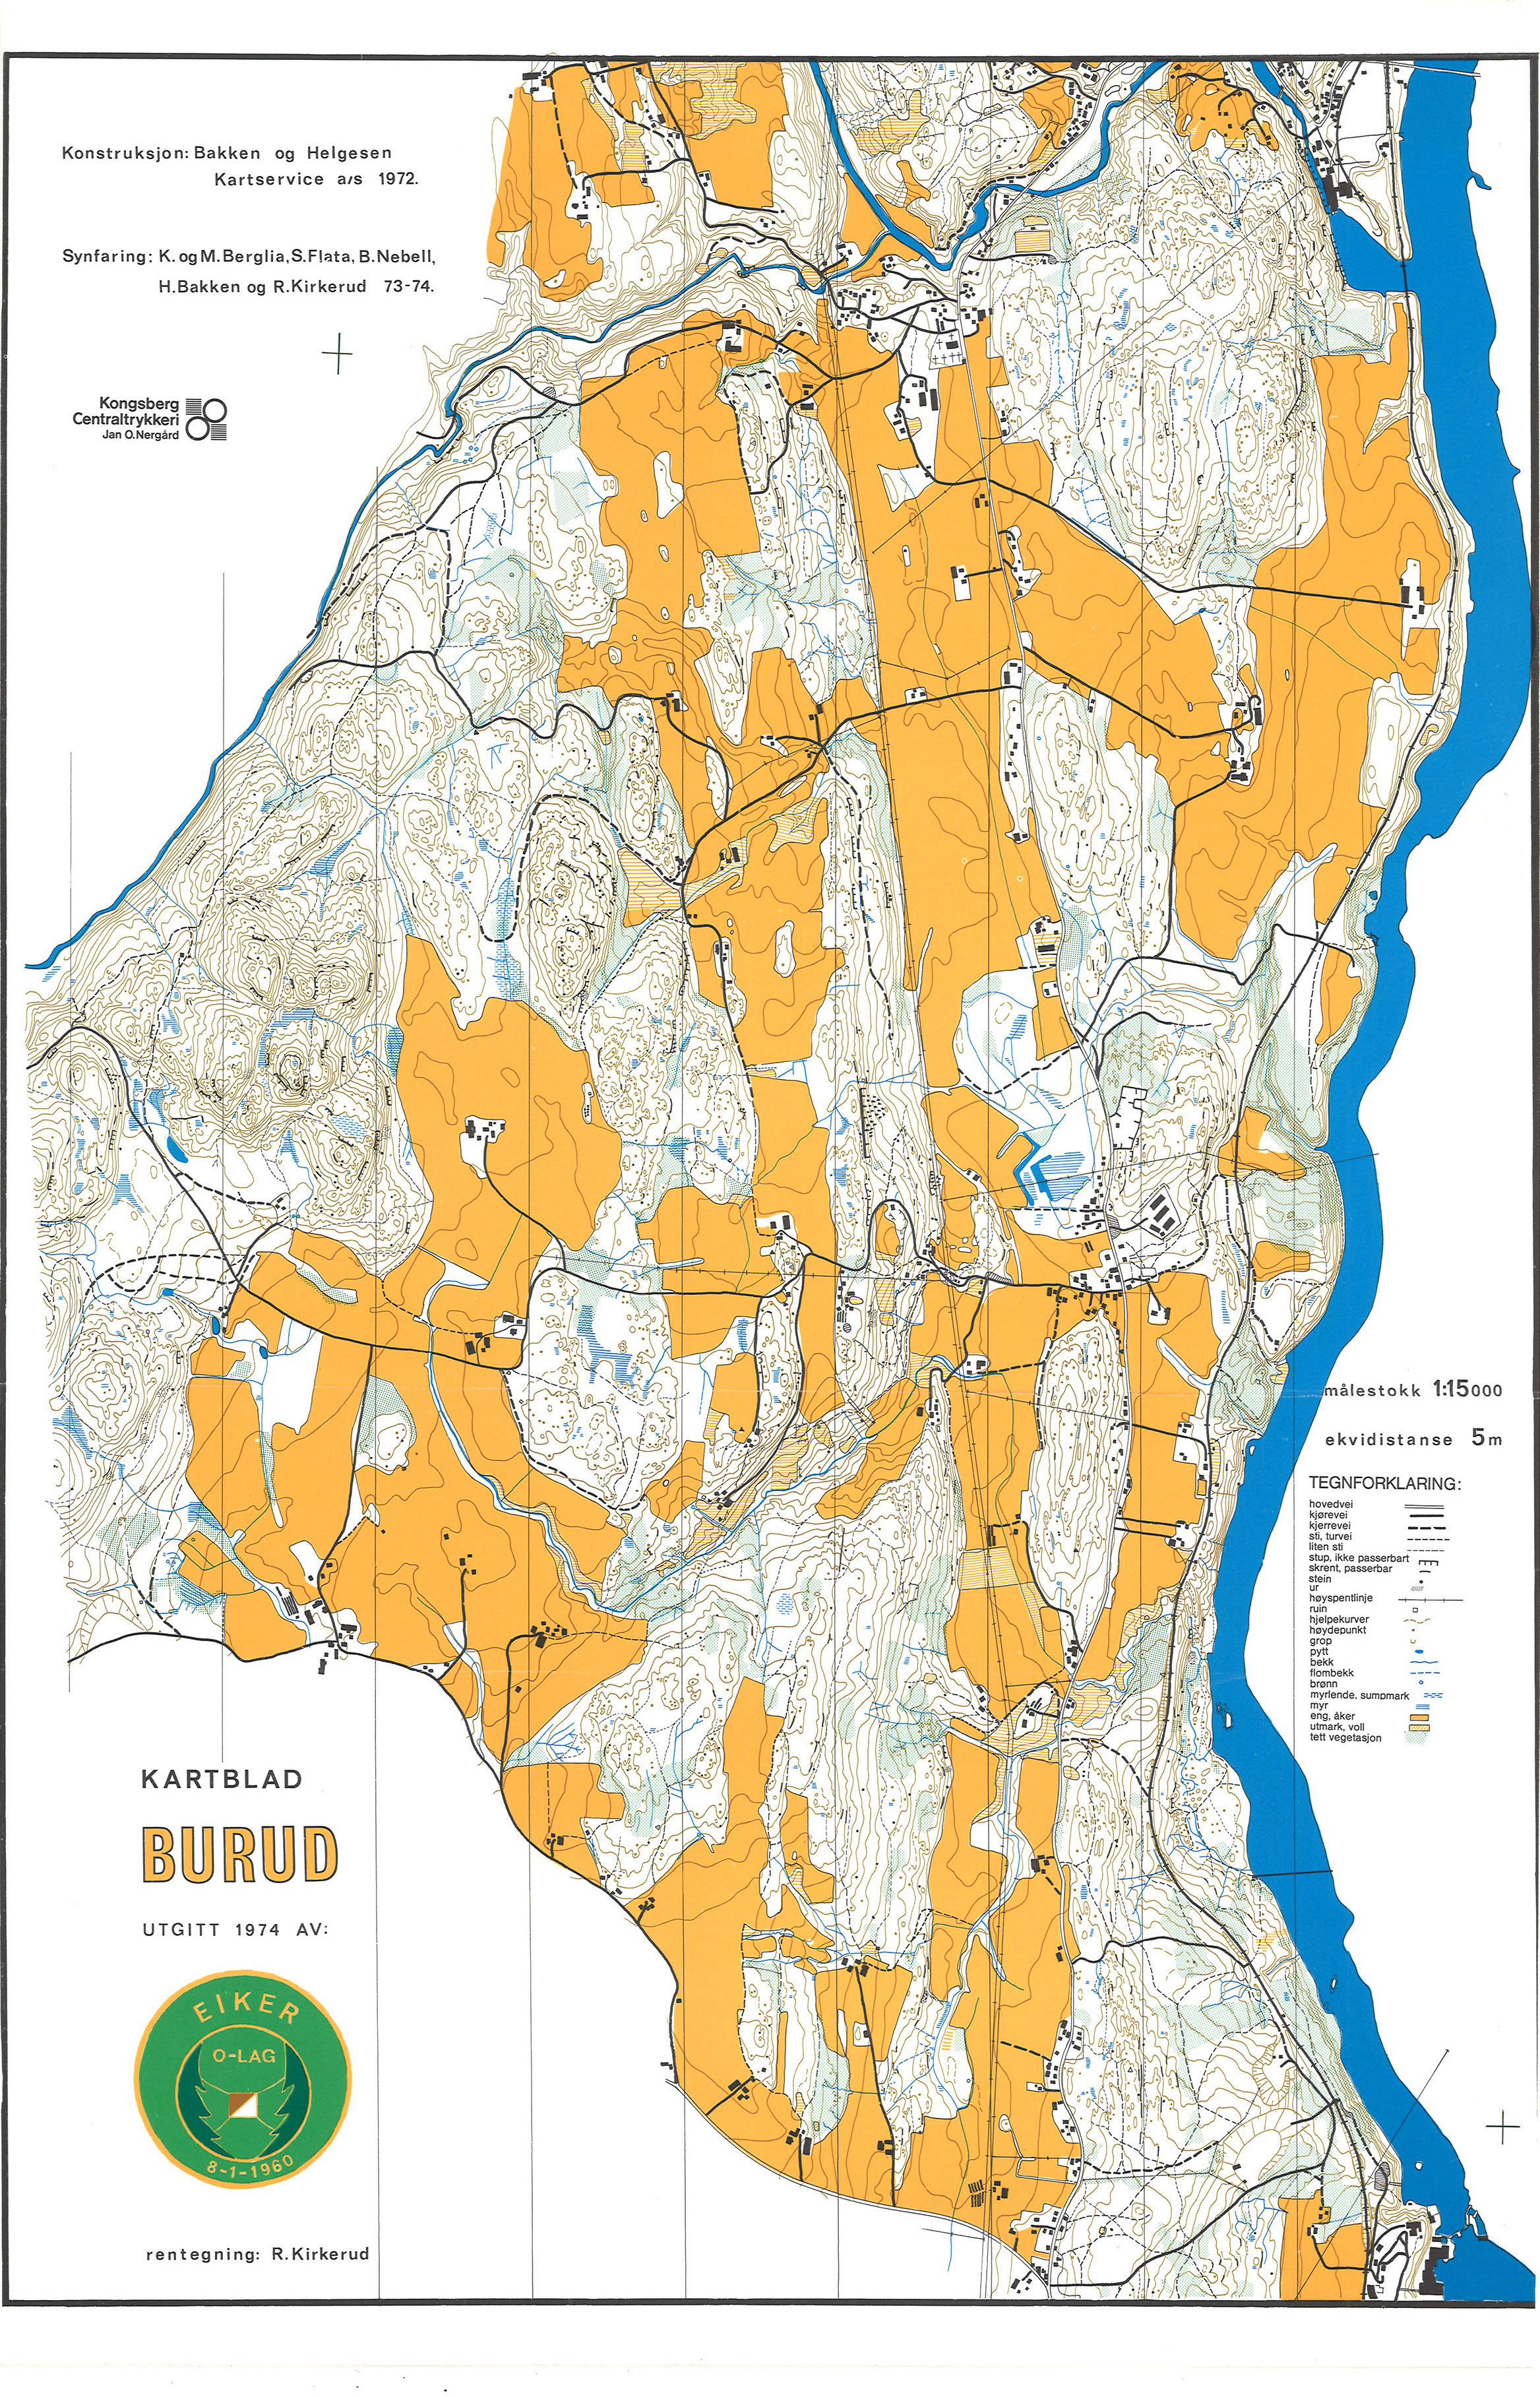 Burud (01-01-1974)